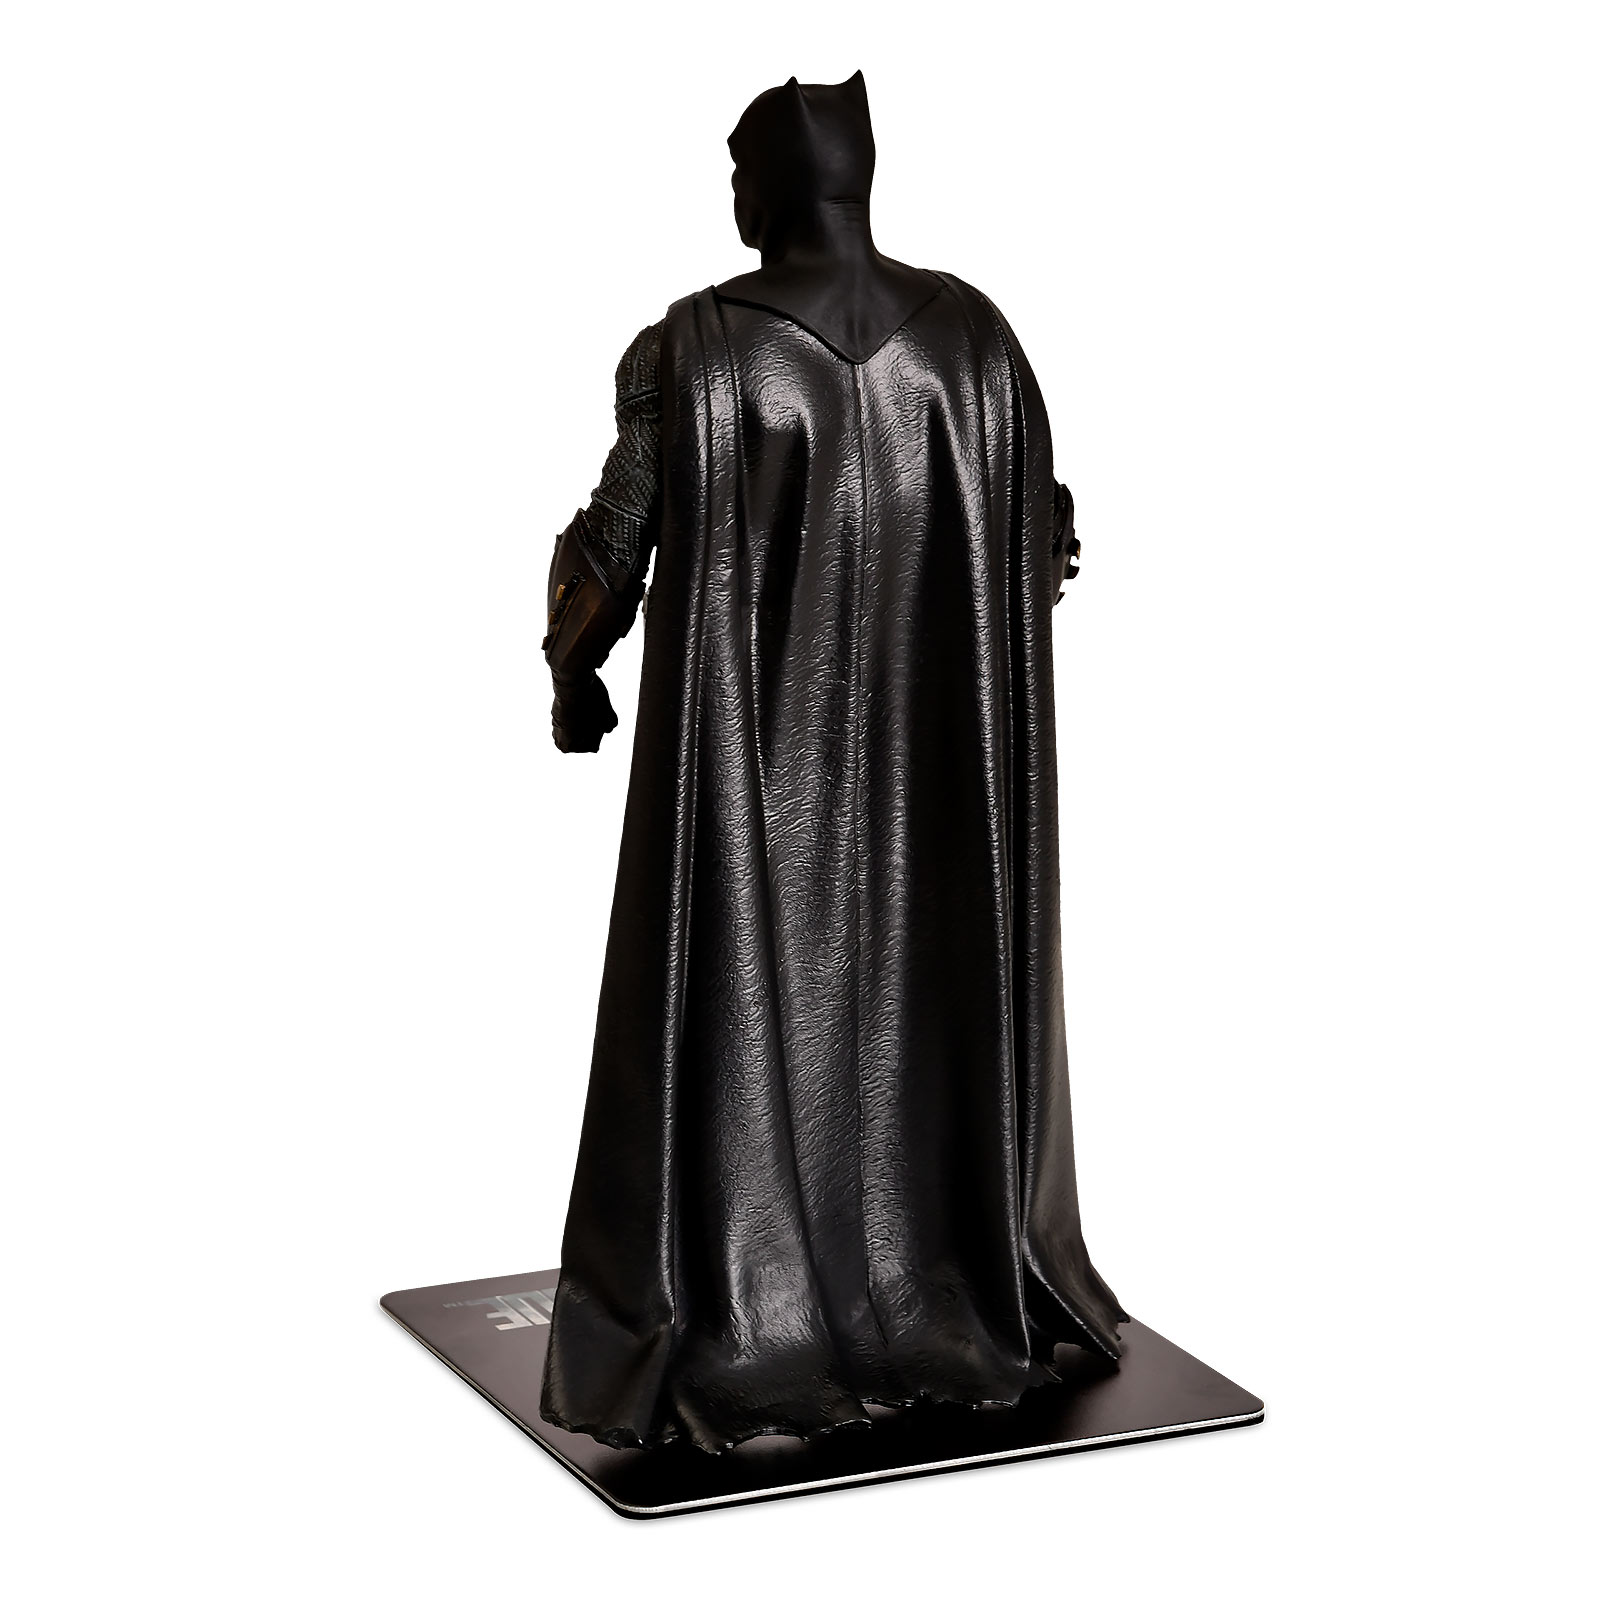 Batman - Justice League ArtFX+ Figure 19 cm